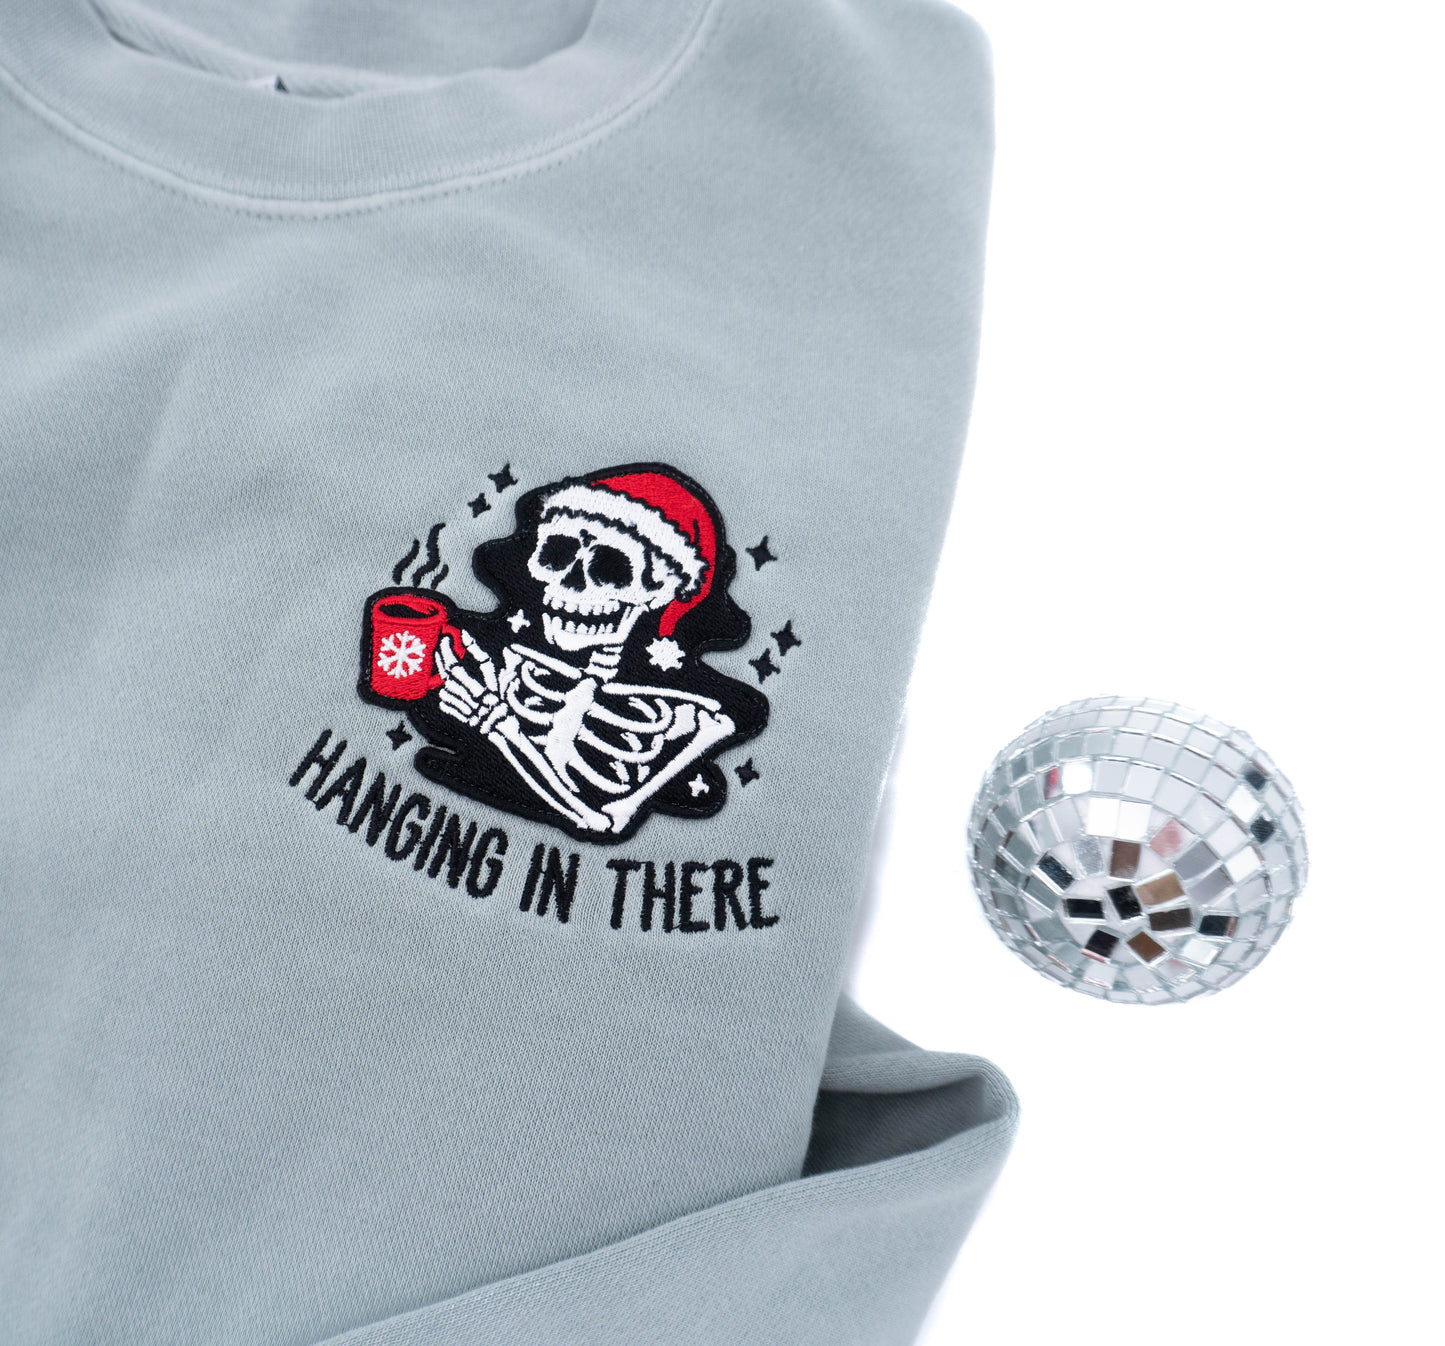 Hanging In There Christmas Skeleton - Embroidered Sweatshirt (Sea Salt)